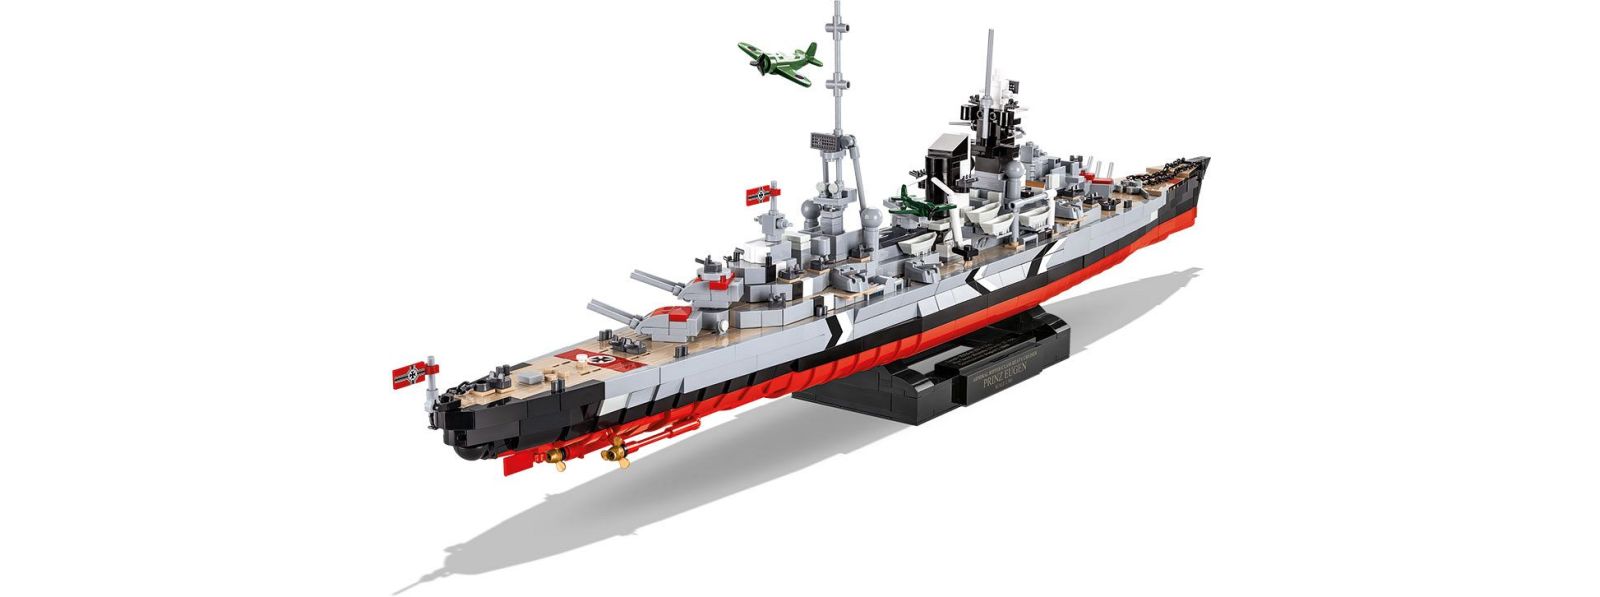 Prinz Eugen Heavy Cruiser Limited Edition - already in pre-sale!